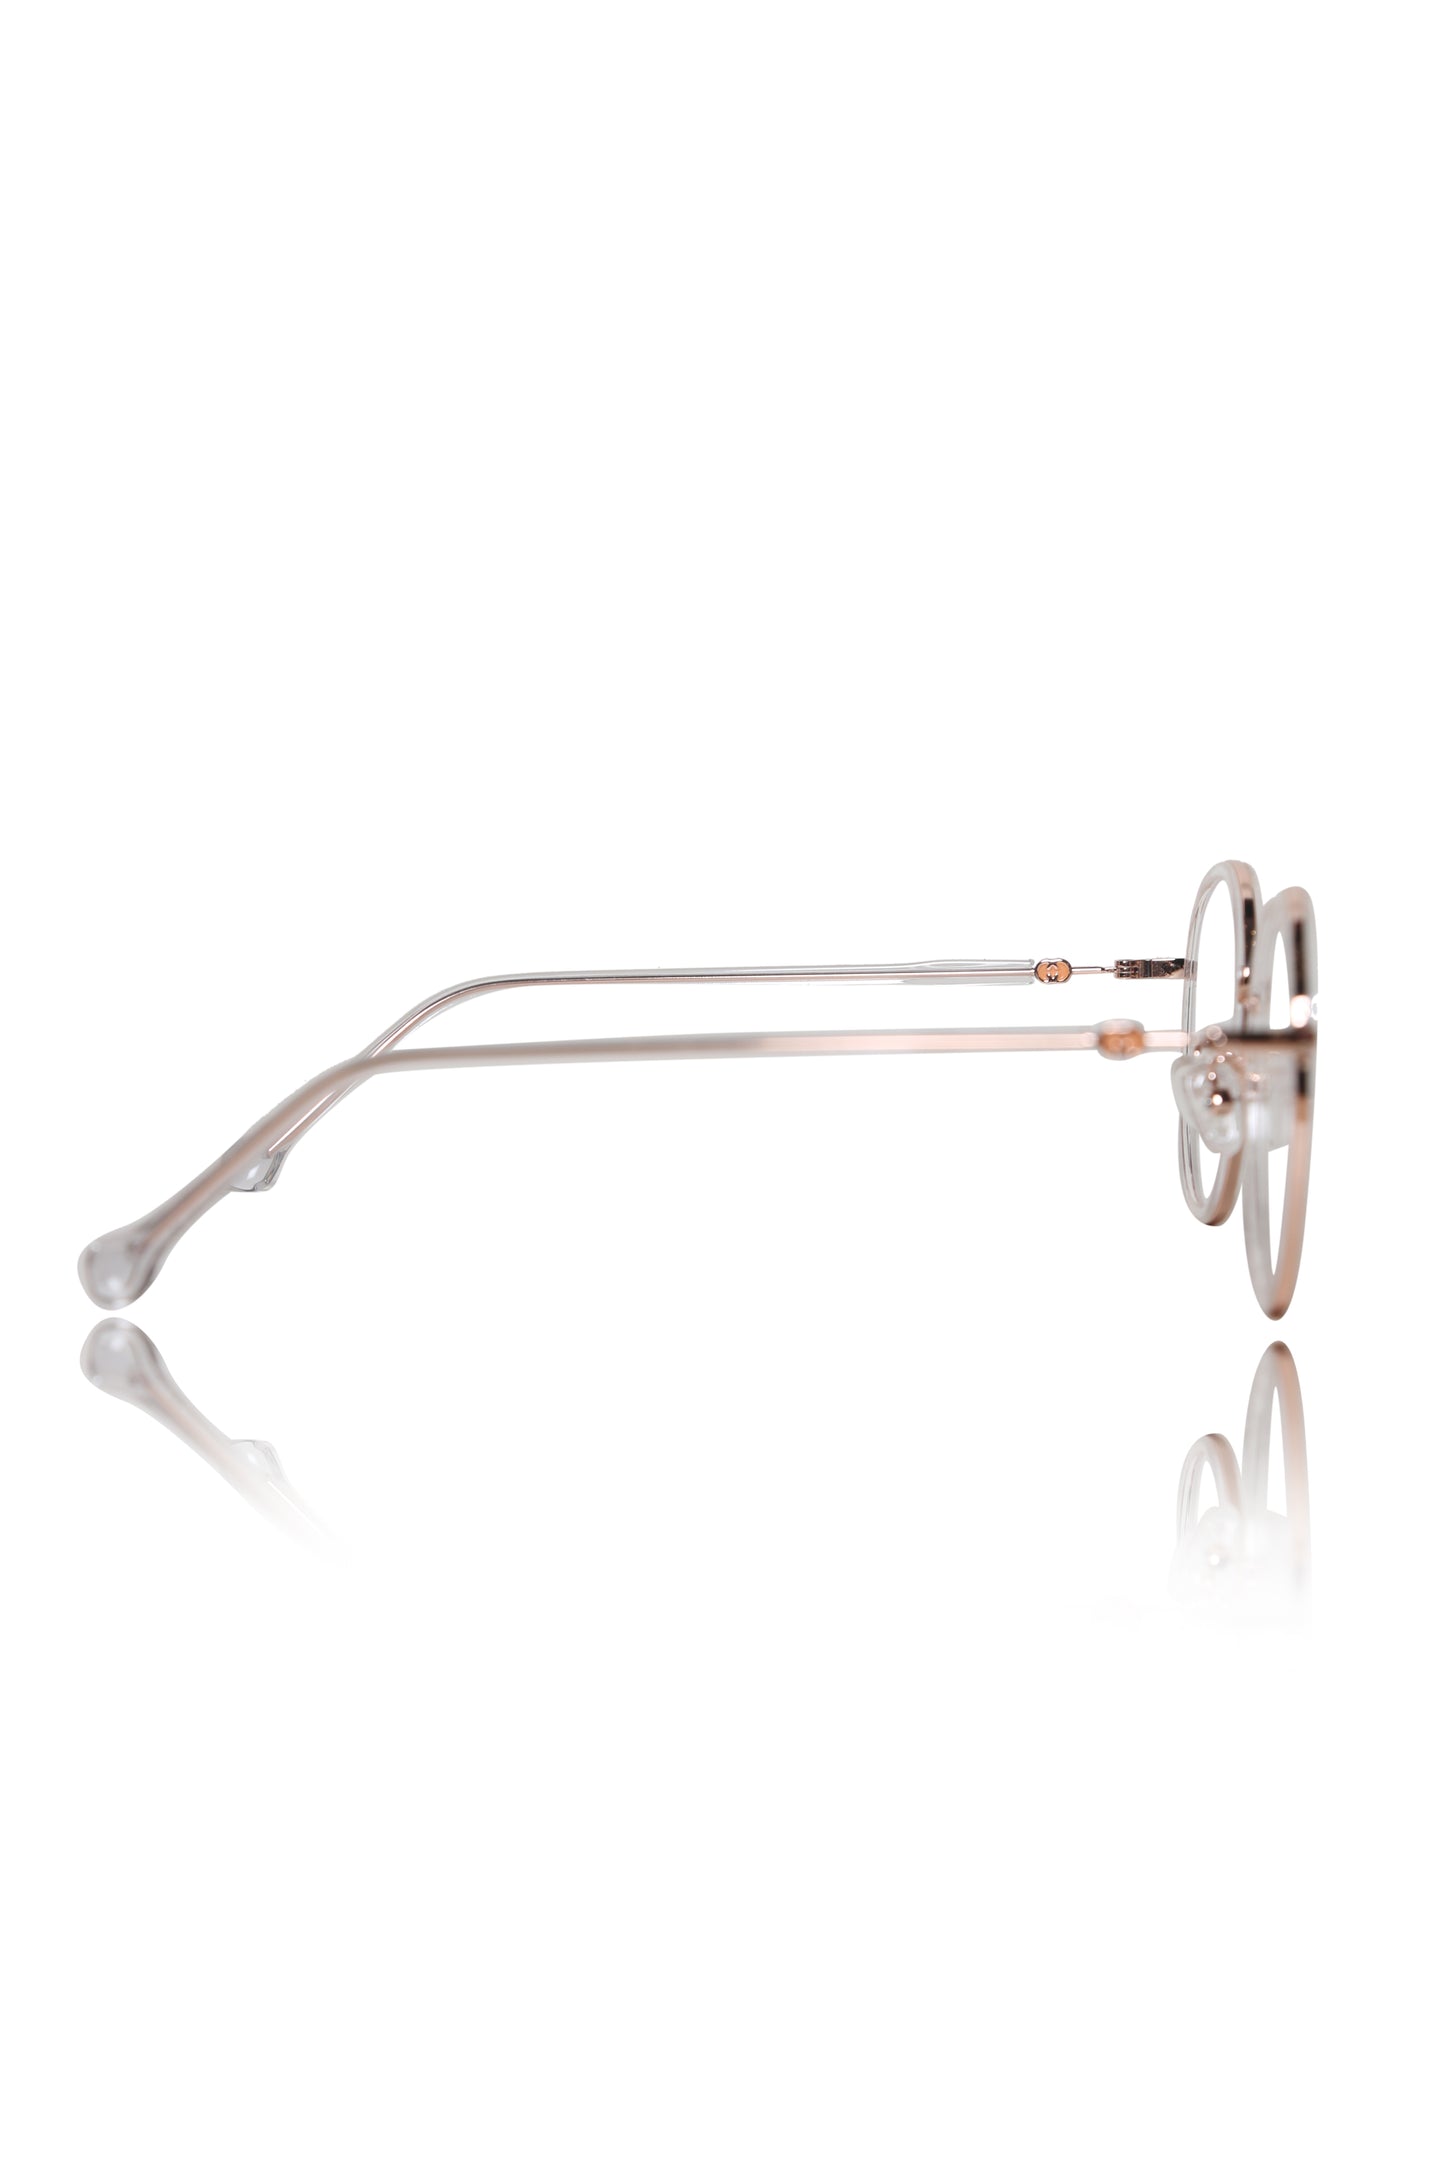 Jodykoes® Premium Series Round Eyewear Eyeglasses Spectacles Frame for Men and Women (Transparent)